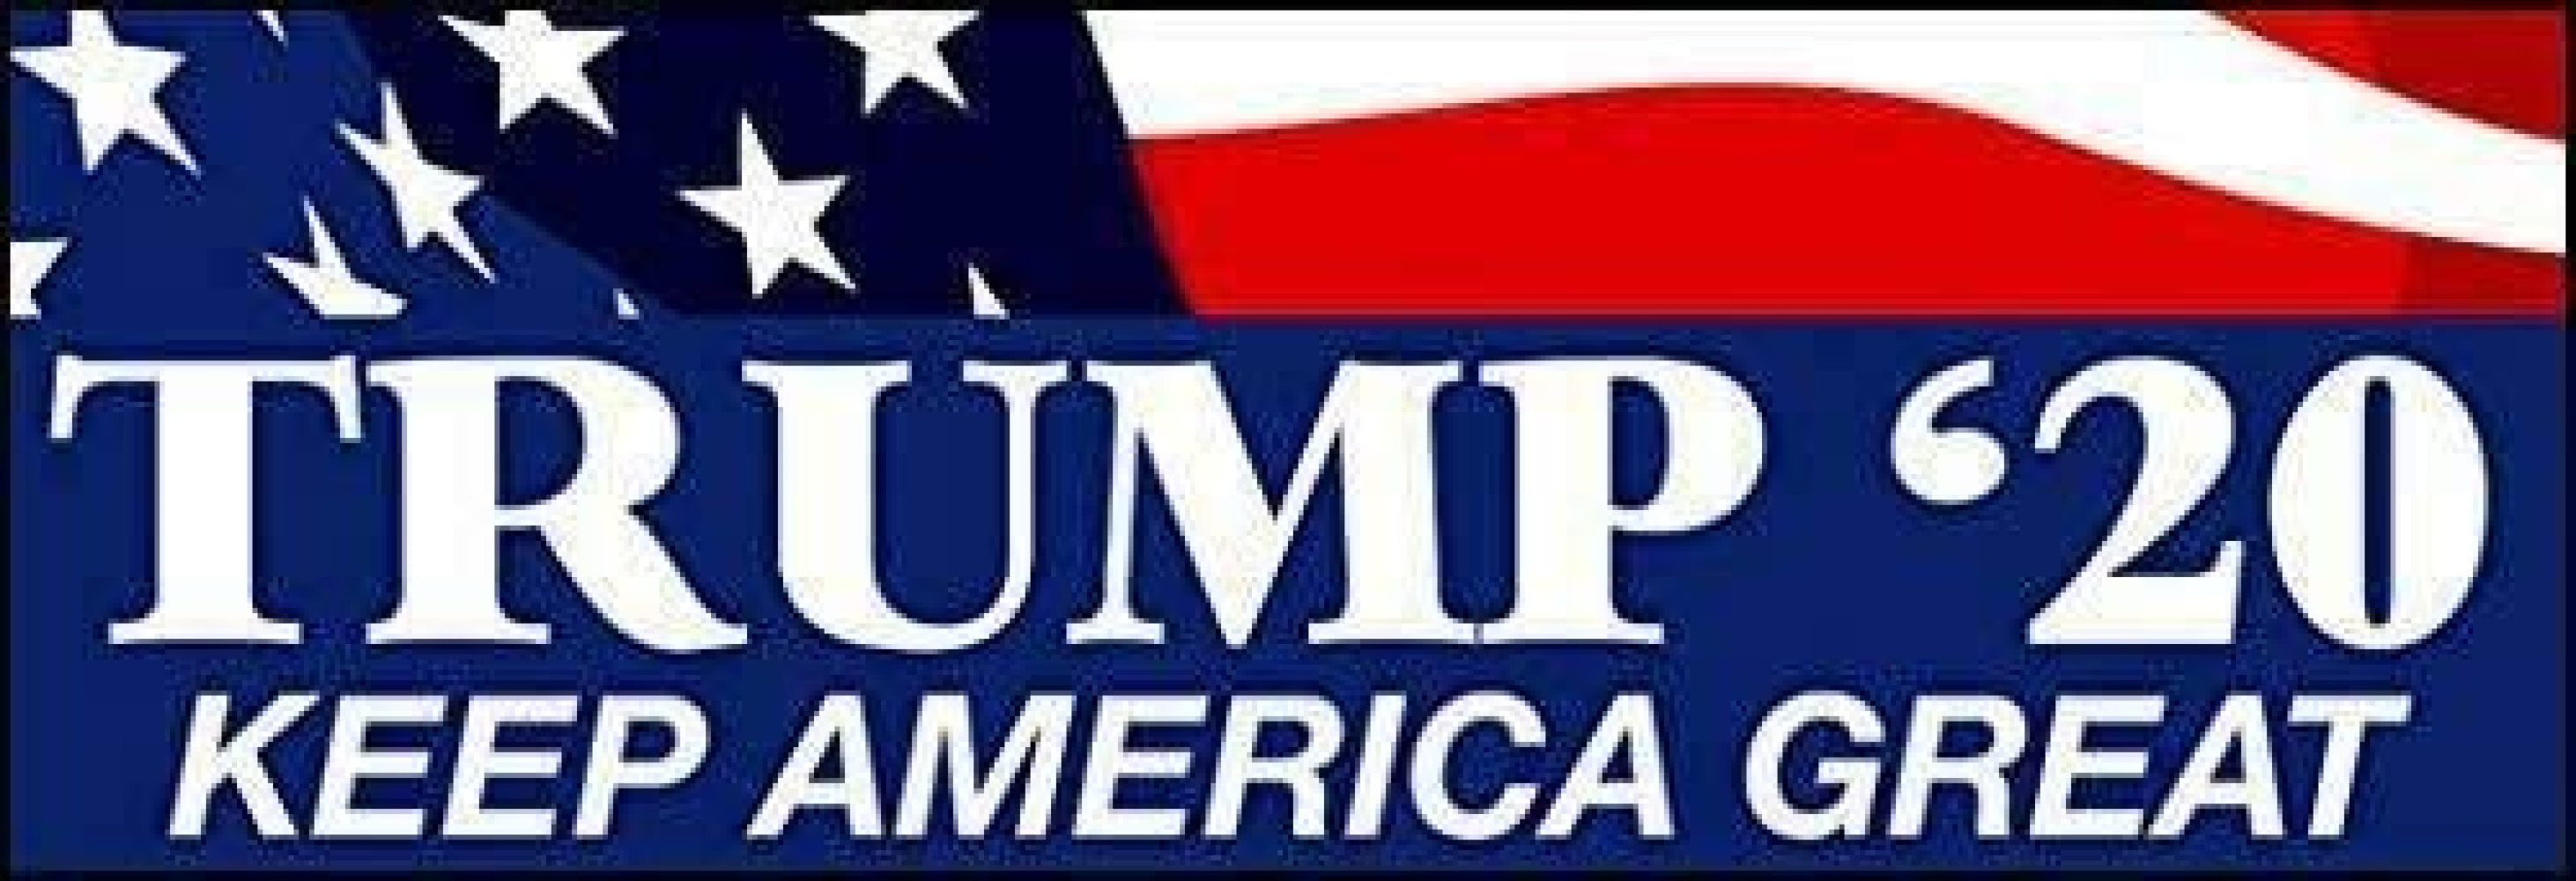 100 TRUMP 2020 MAGA KAG Keep America Great Again bumper stickers Made In USA 